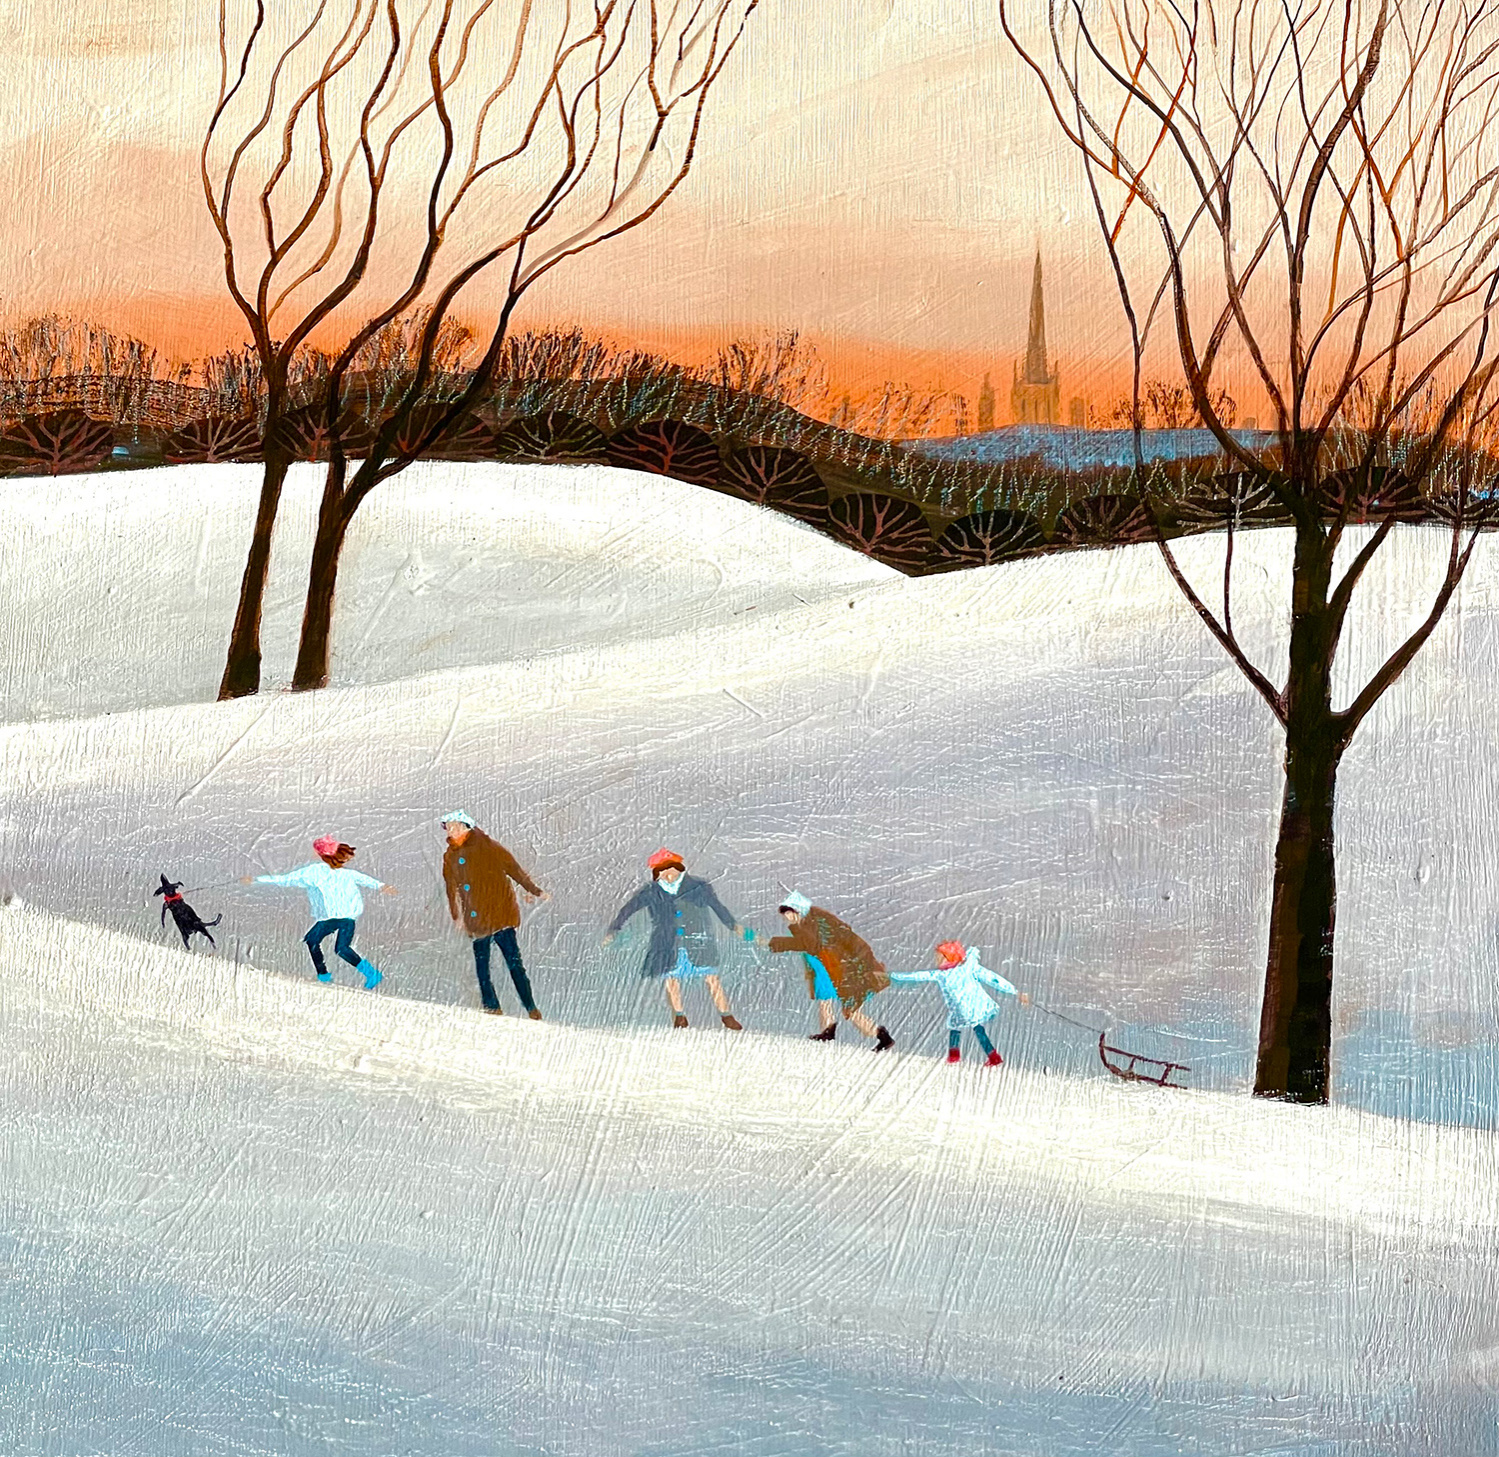 At Last Real Snow by Barbara Peirson